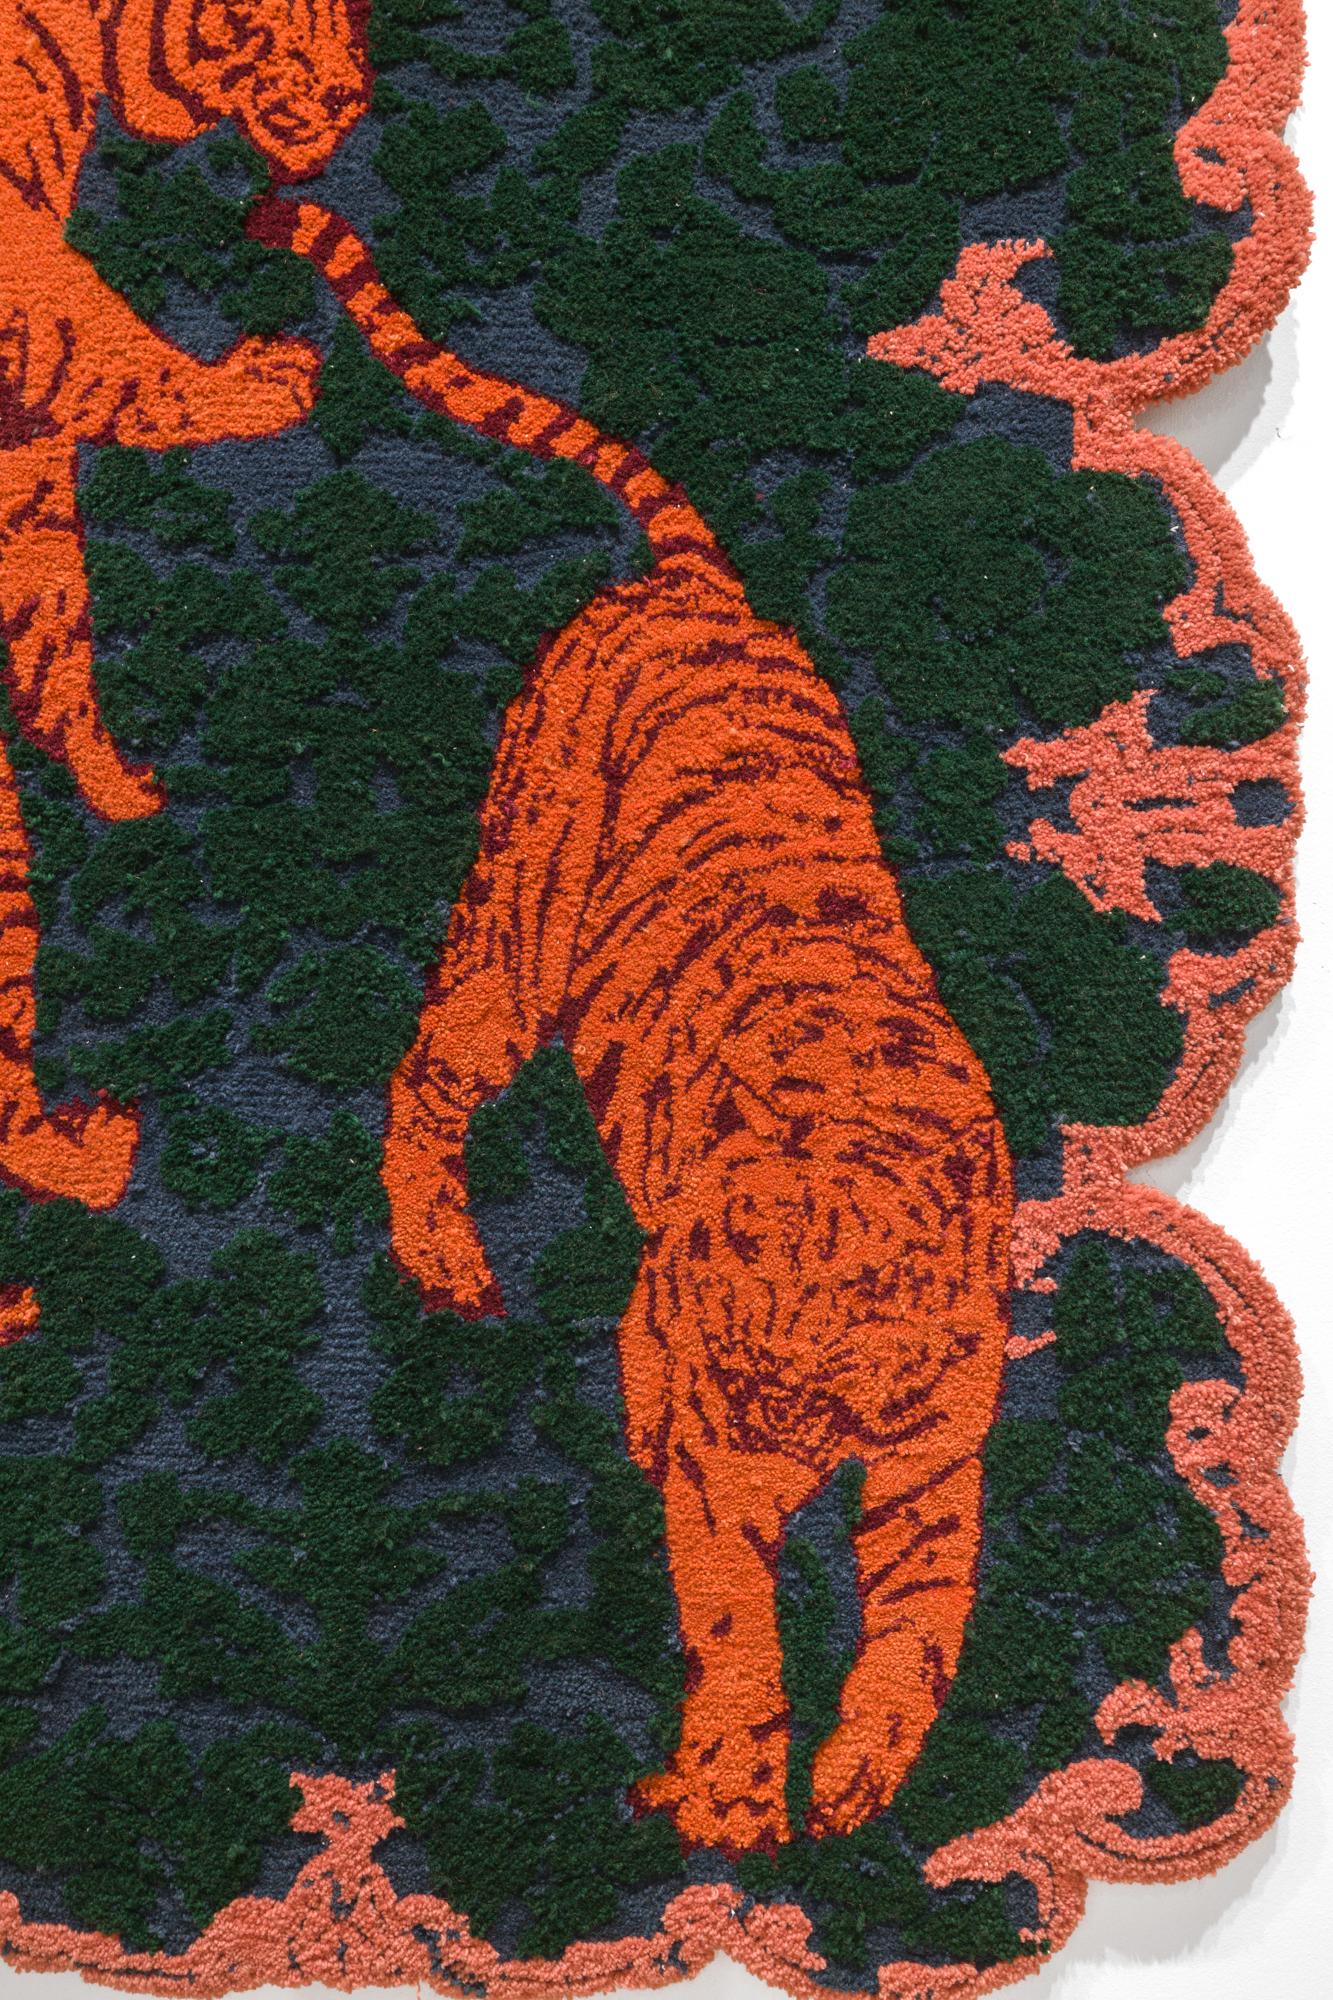 Orange Tiger Rug, Blue, Green, and Pink, Künstler und Workshop Collaboration im Angebot 1